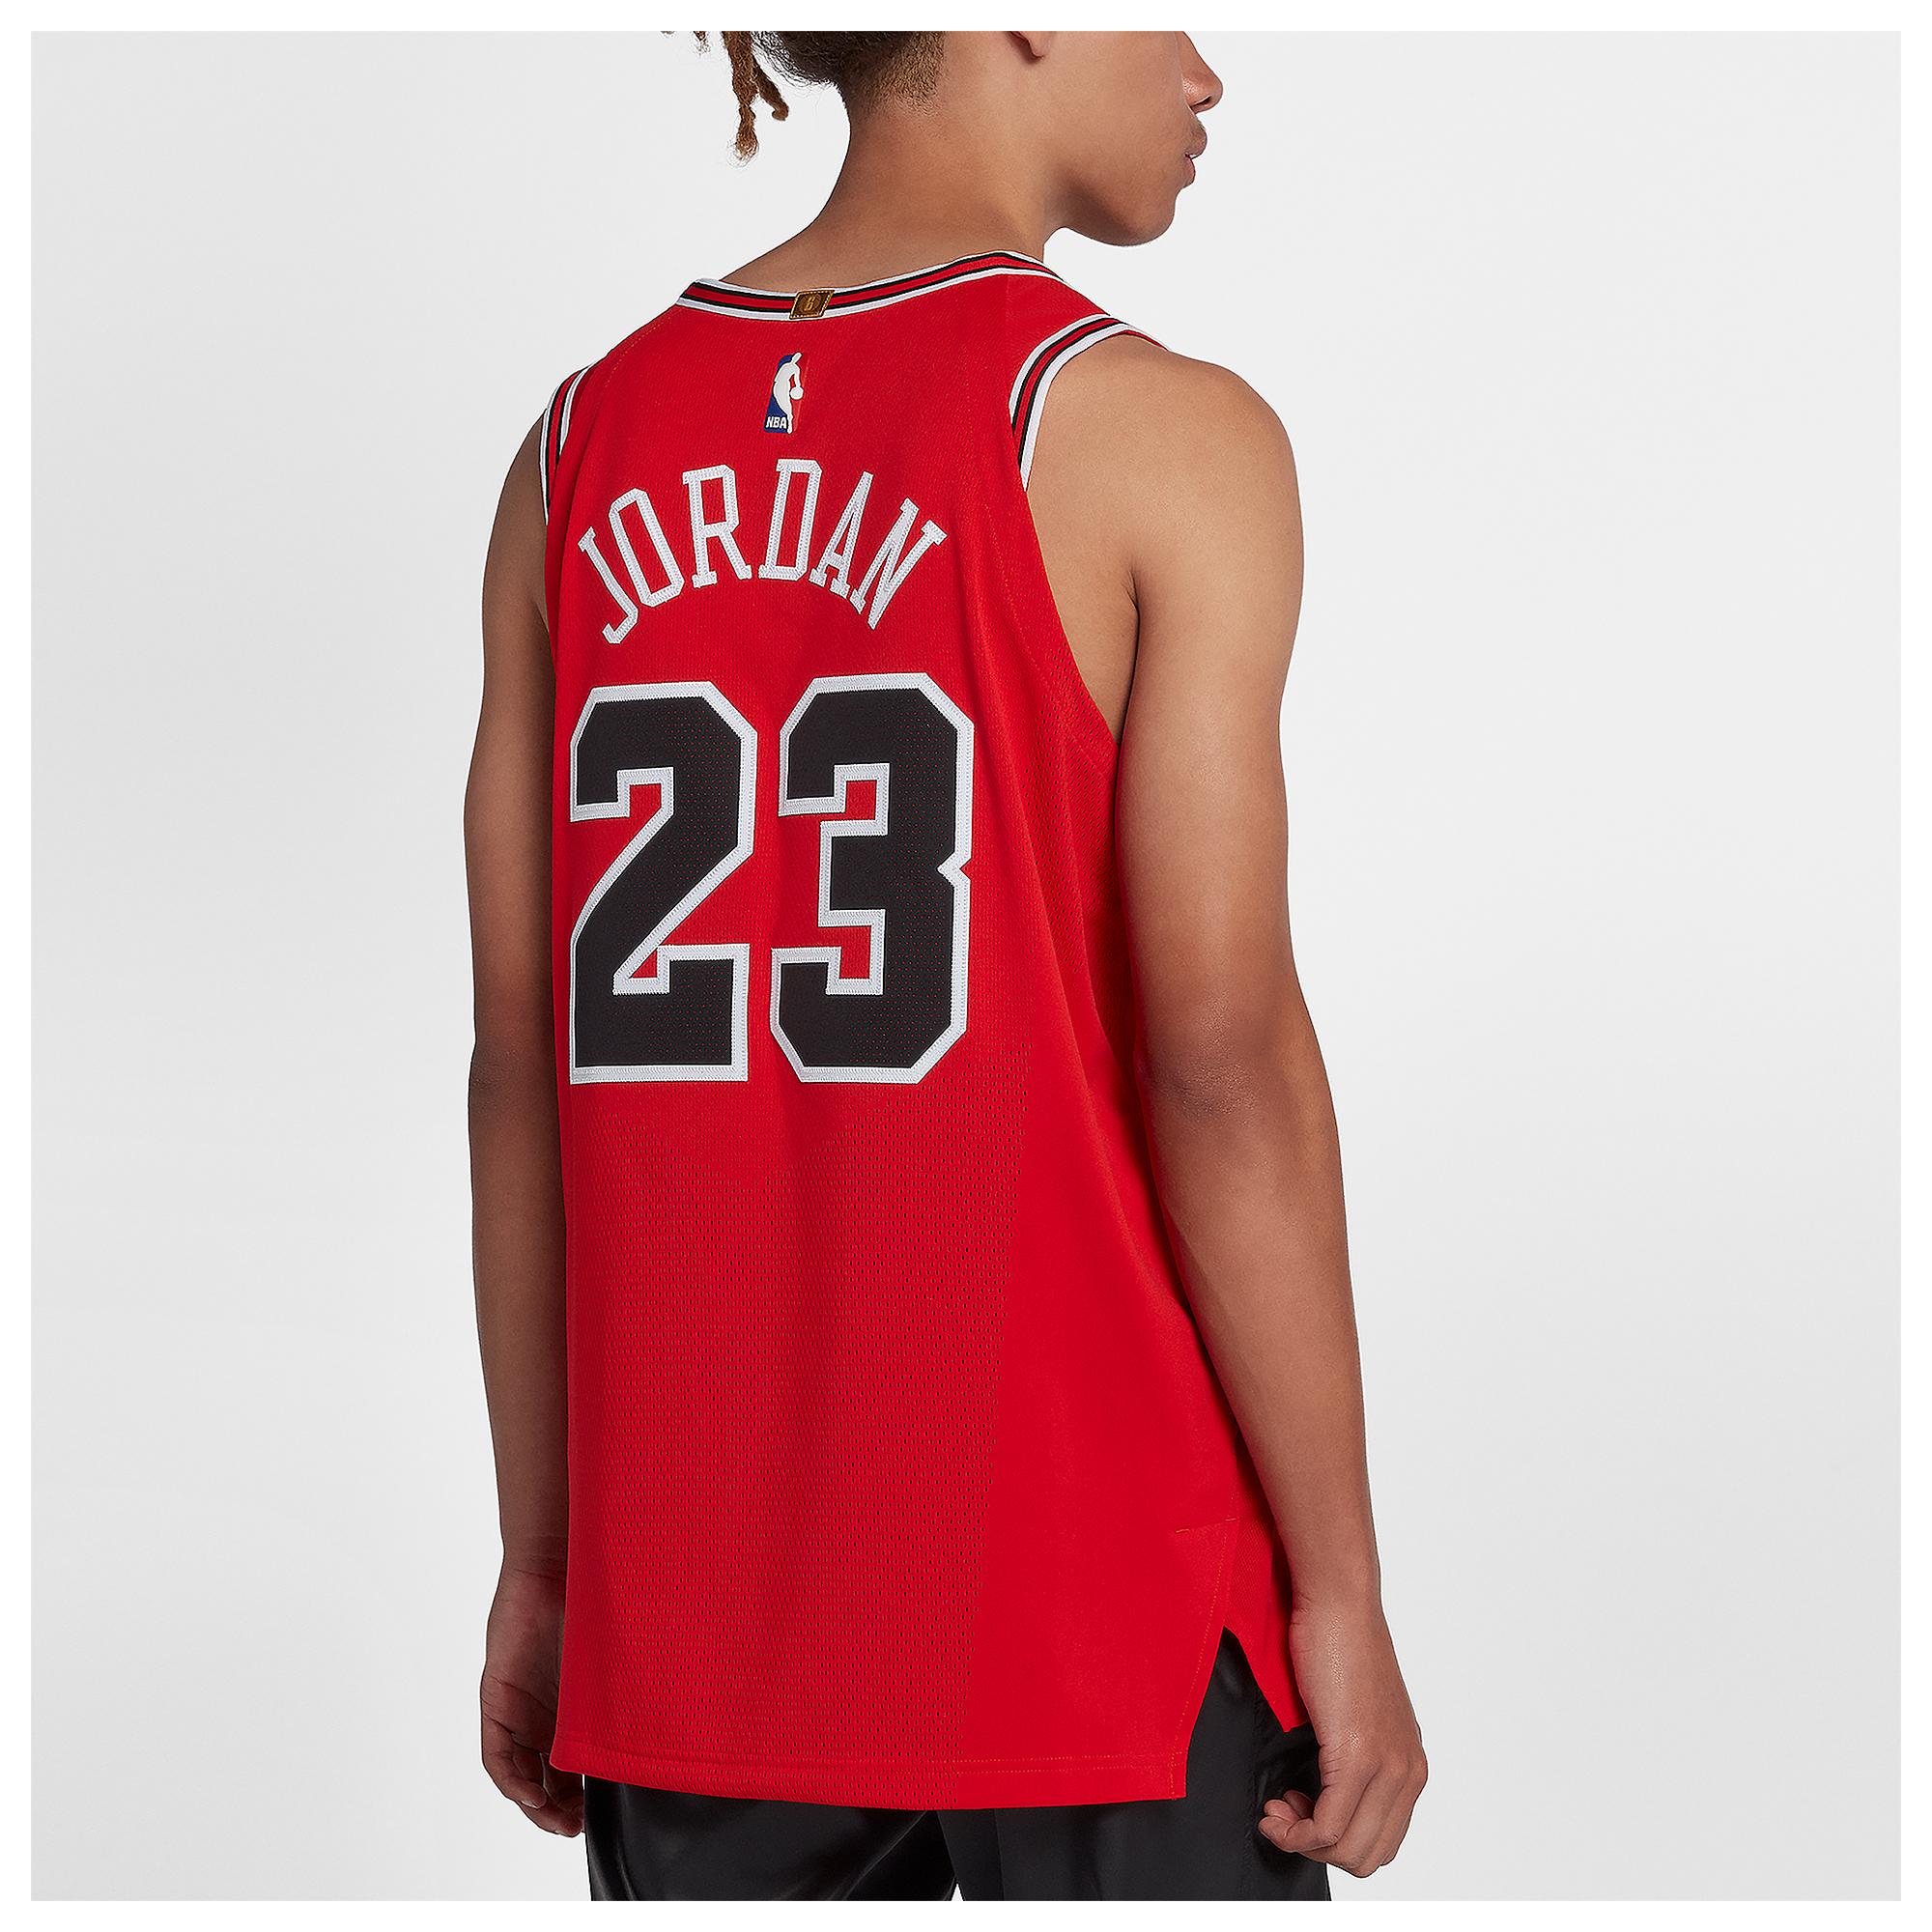 Nike Nba Authentic Jordan Jersey in Red 